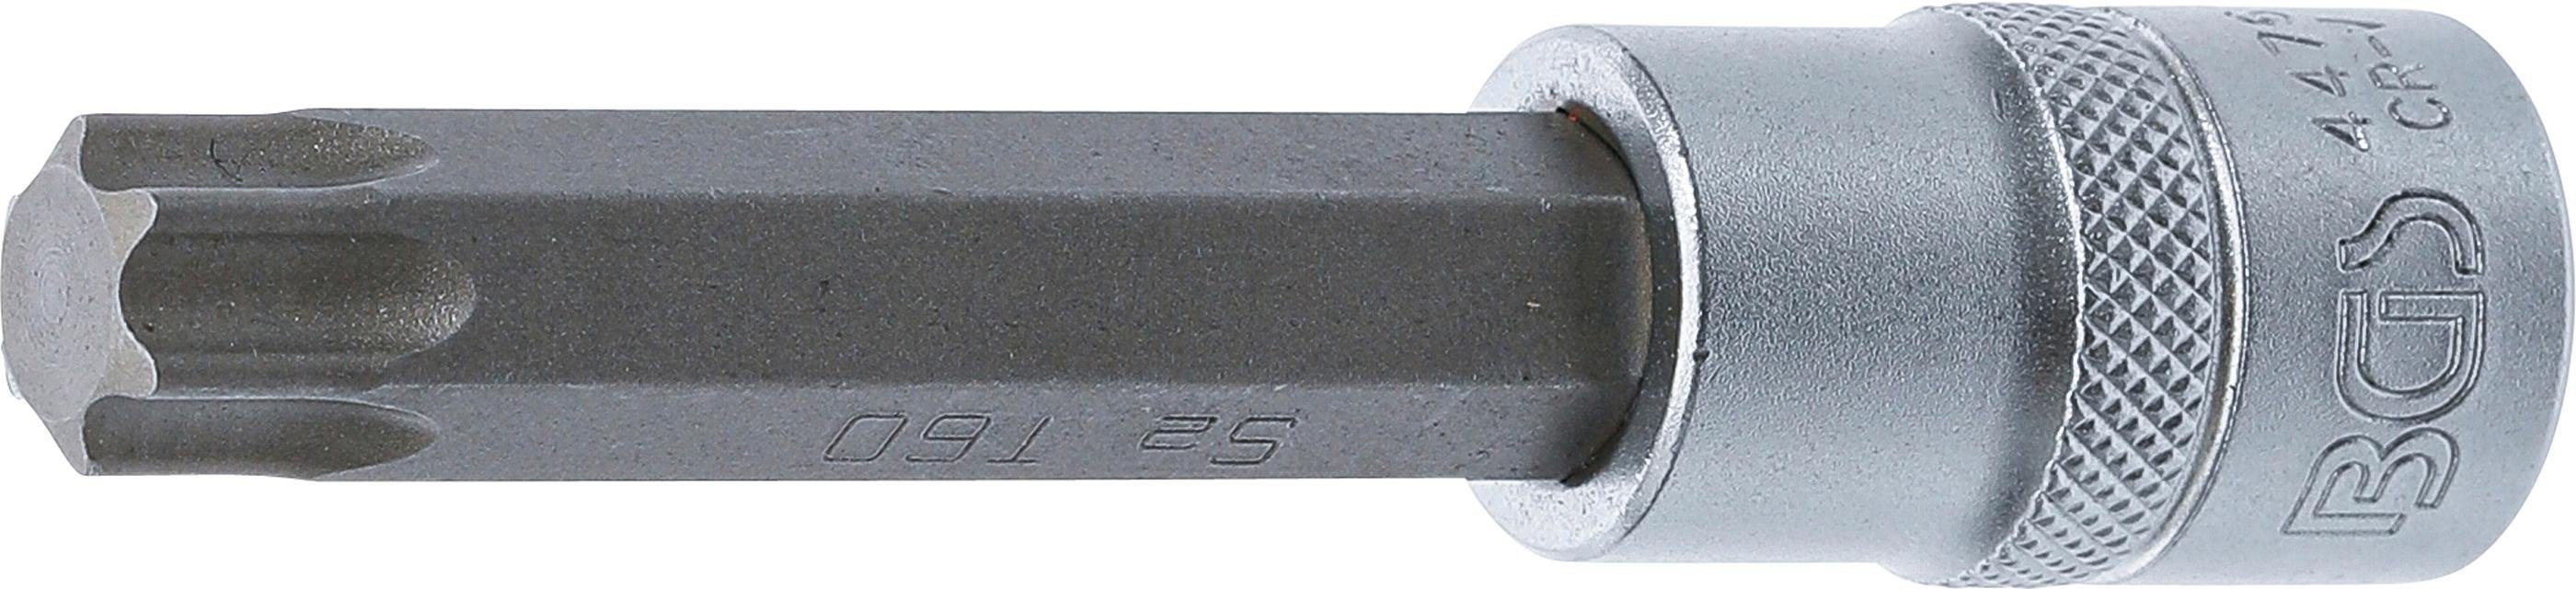 BGS technic Bit-Schraubendreher Bit-Einsatz, Länge 100 mm, Antrieb Innenvierkant 12,5 mm (1/2), T-Profil (für Torx) T60